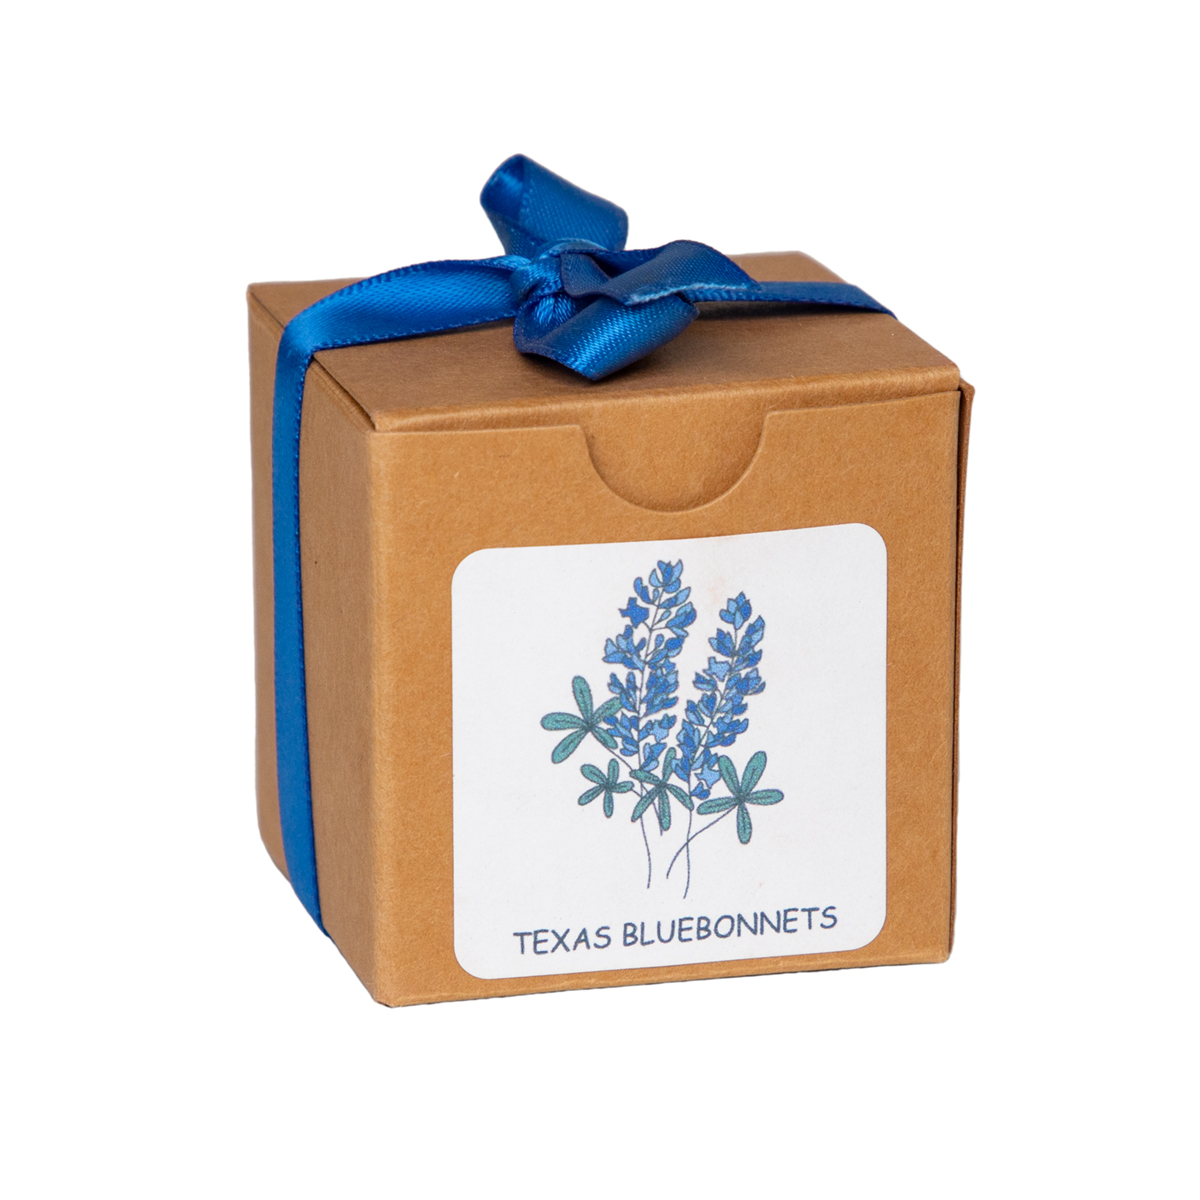 Texas Bluebonnet Growing Kit